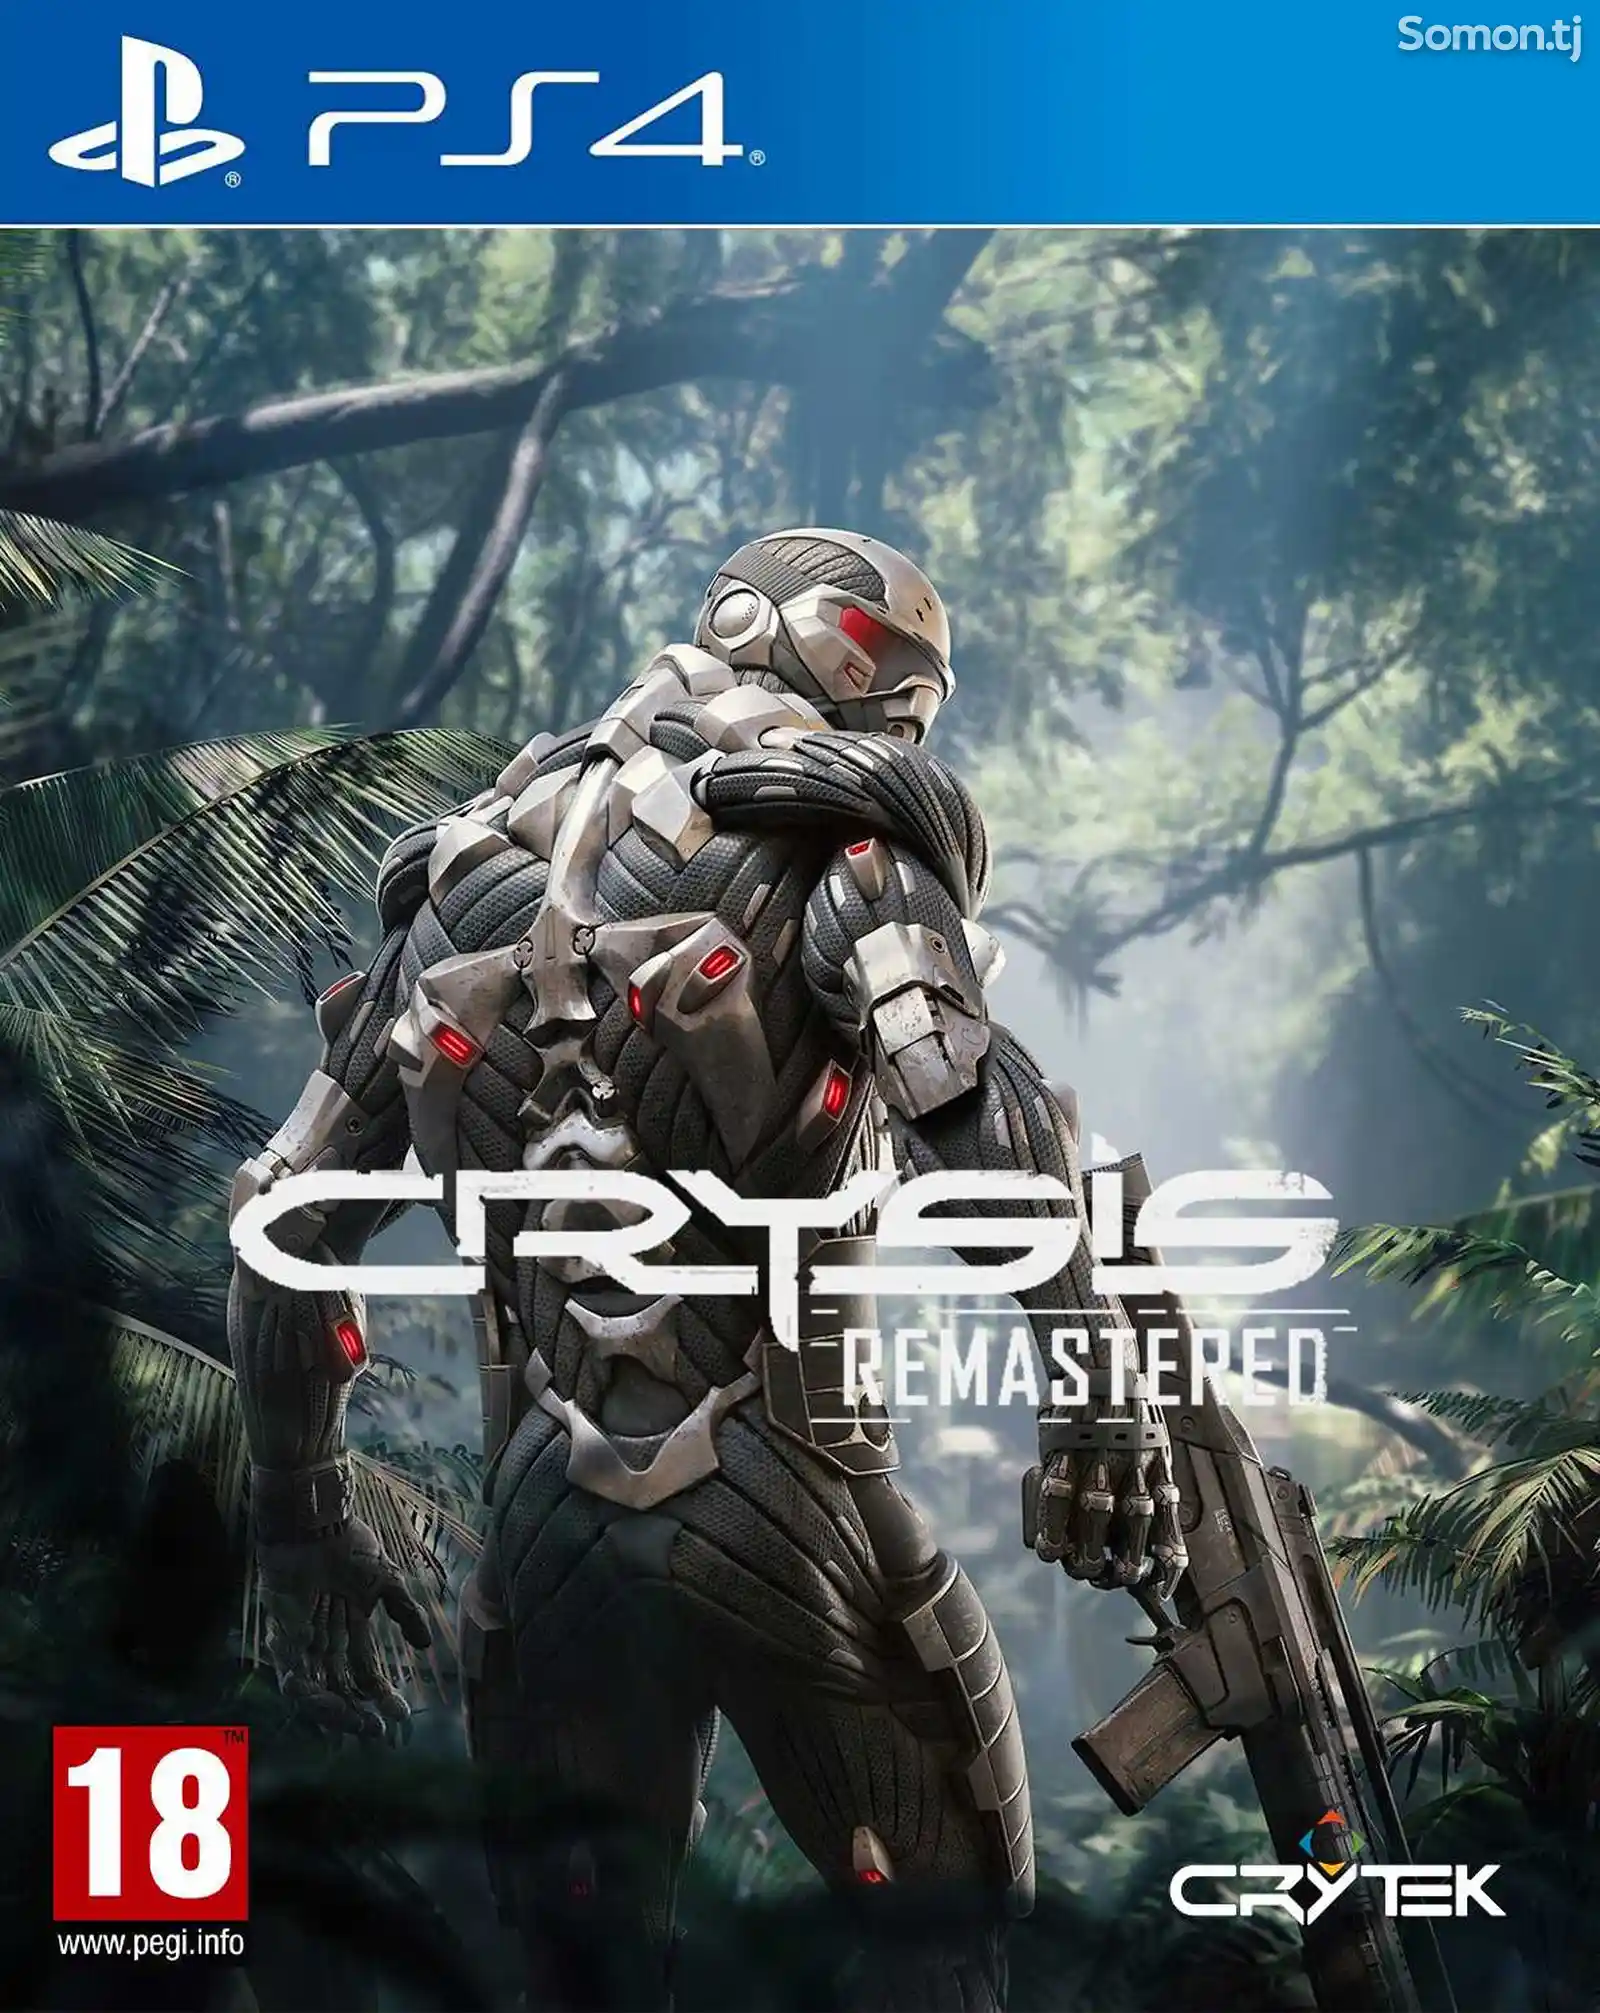 Игра Crysis 2 remastered для PS-4 / 5.05 / 6.72 / 7.02 / 7.55 / 9.00 /-1